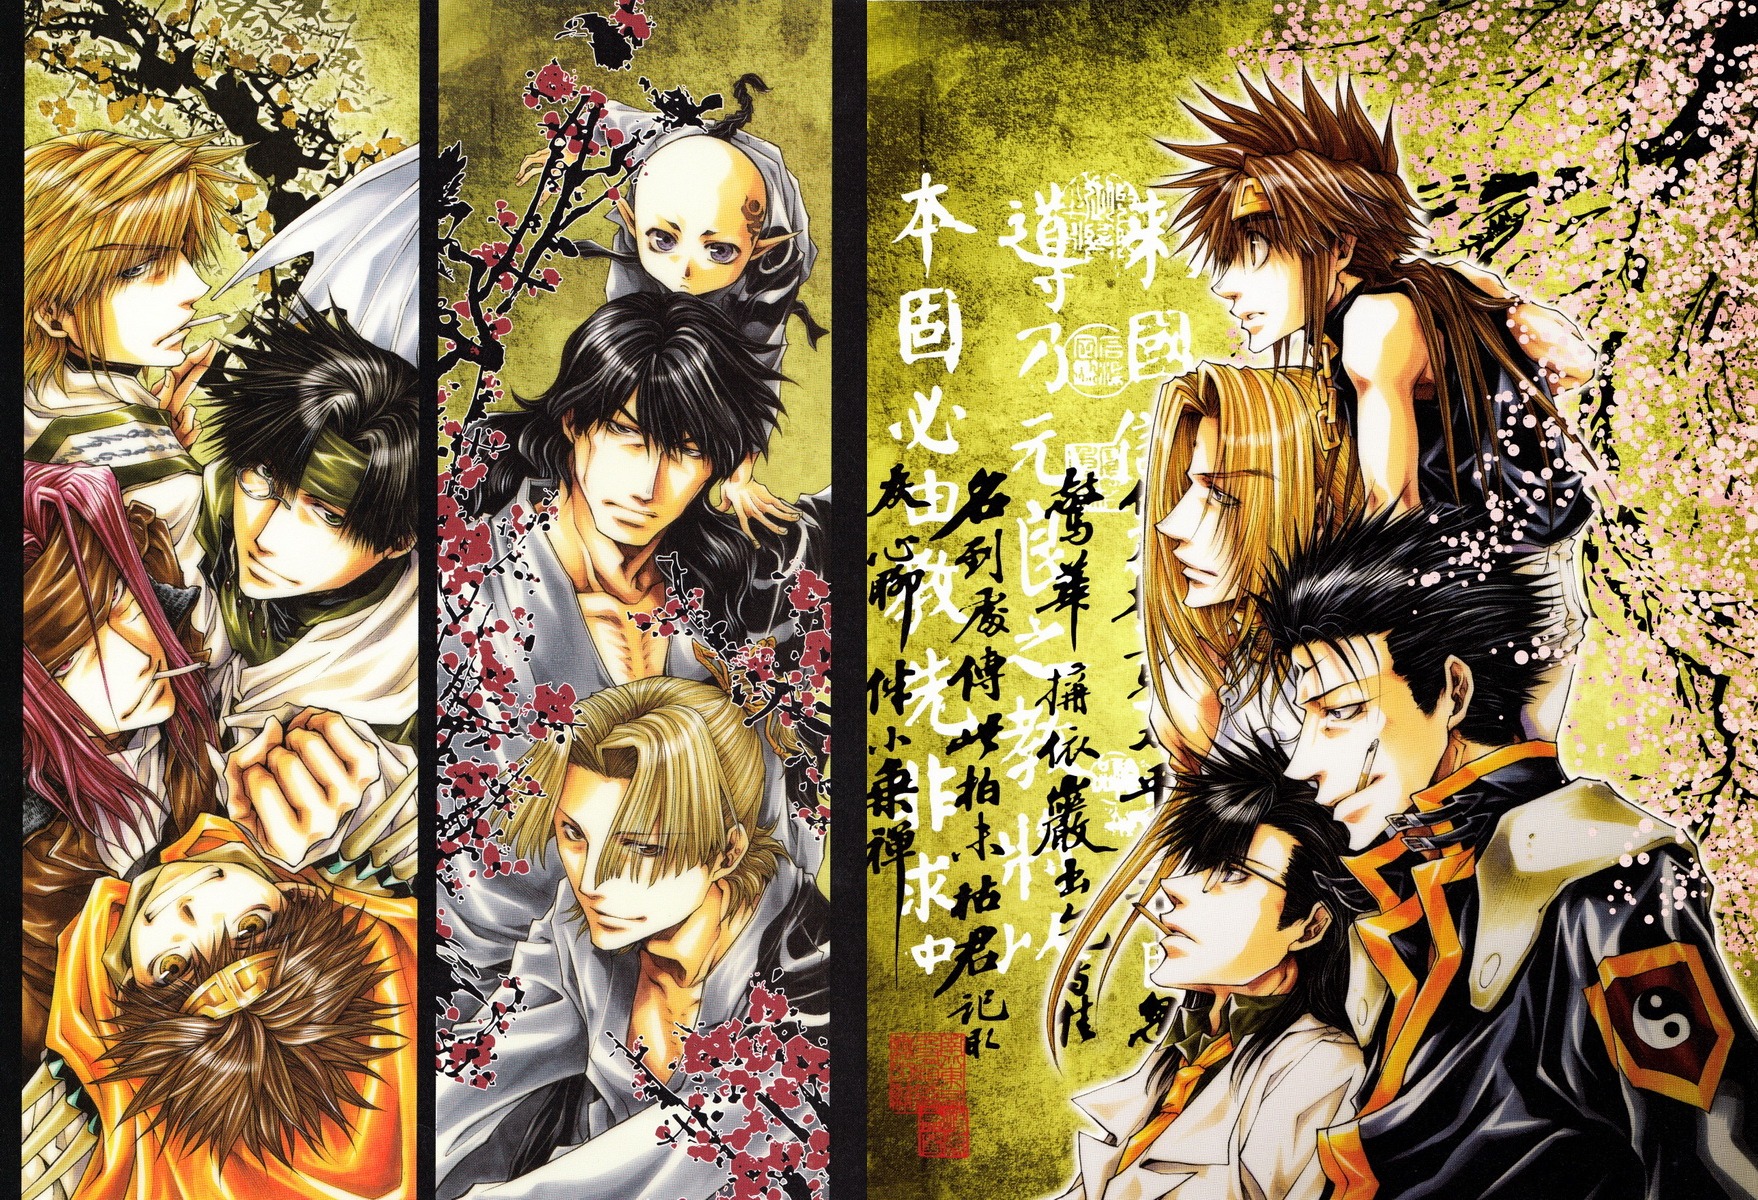 Ayase Sayuki - Other & Anime Background Wallpapers on Desktop Nexus (Image  748983)